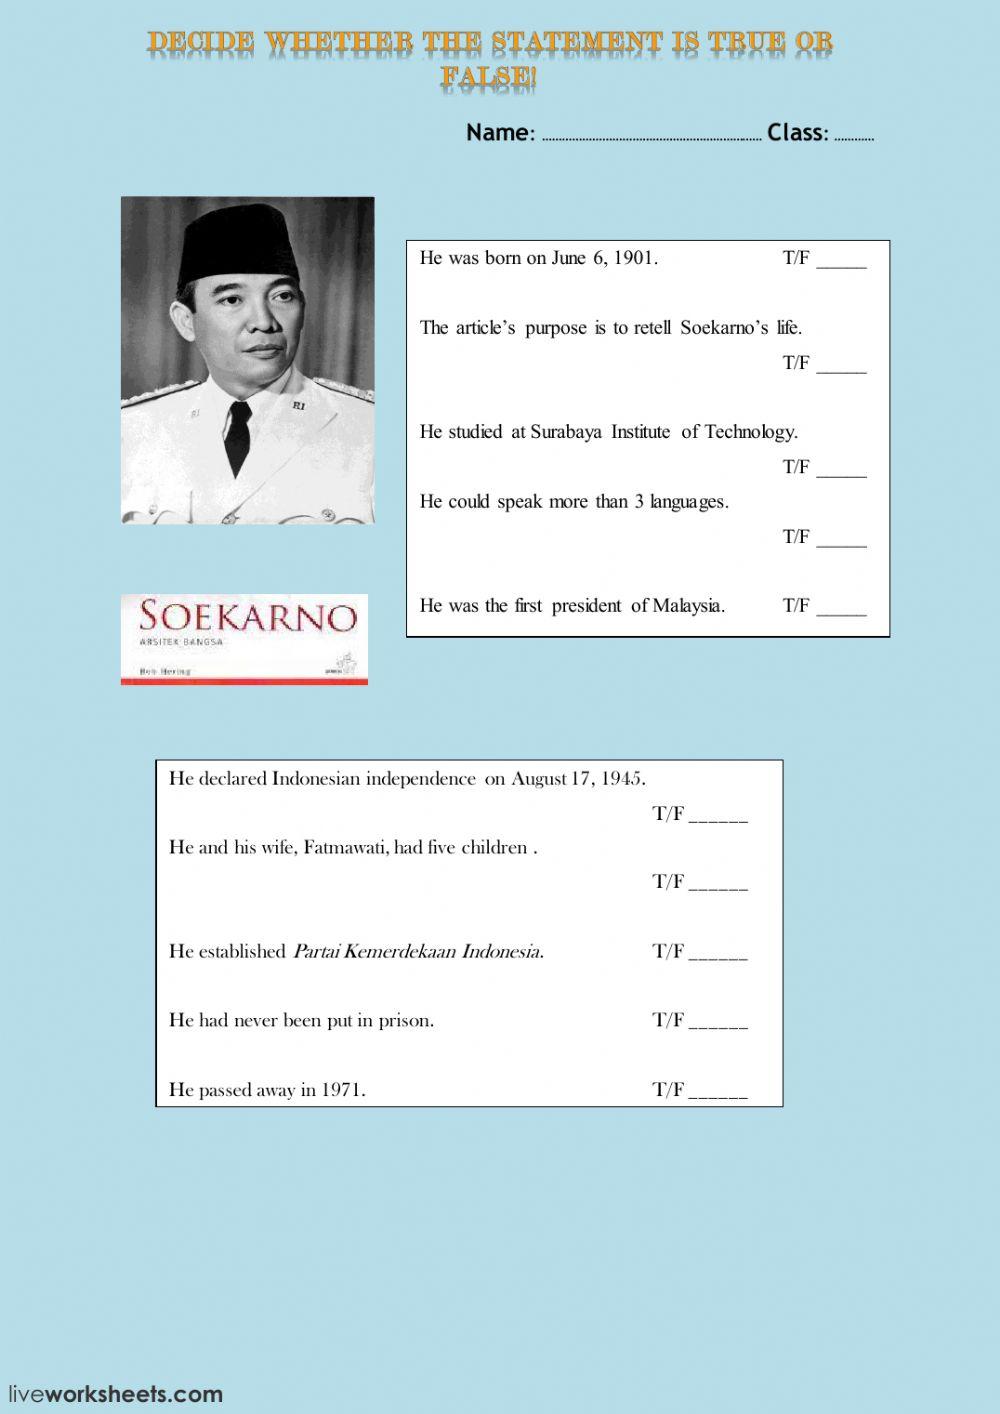 True or False President Soekarno